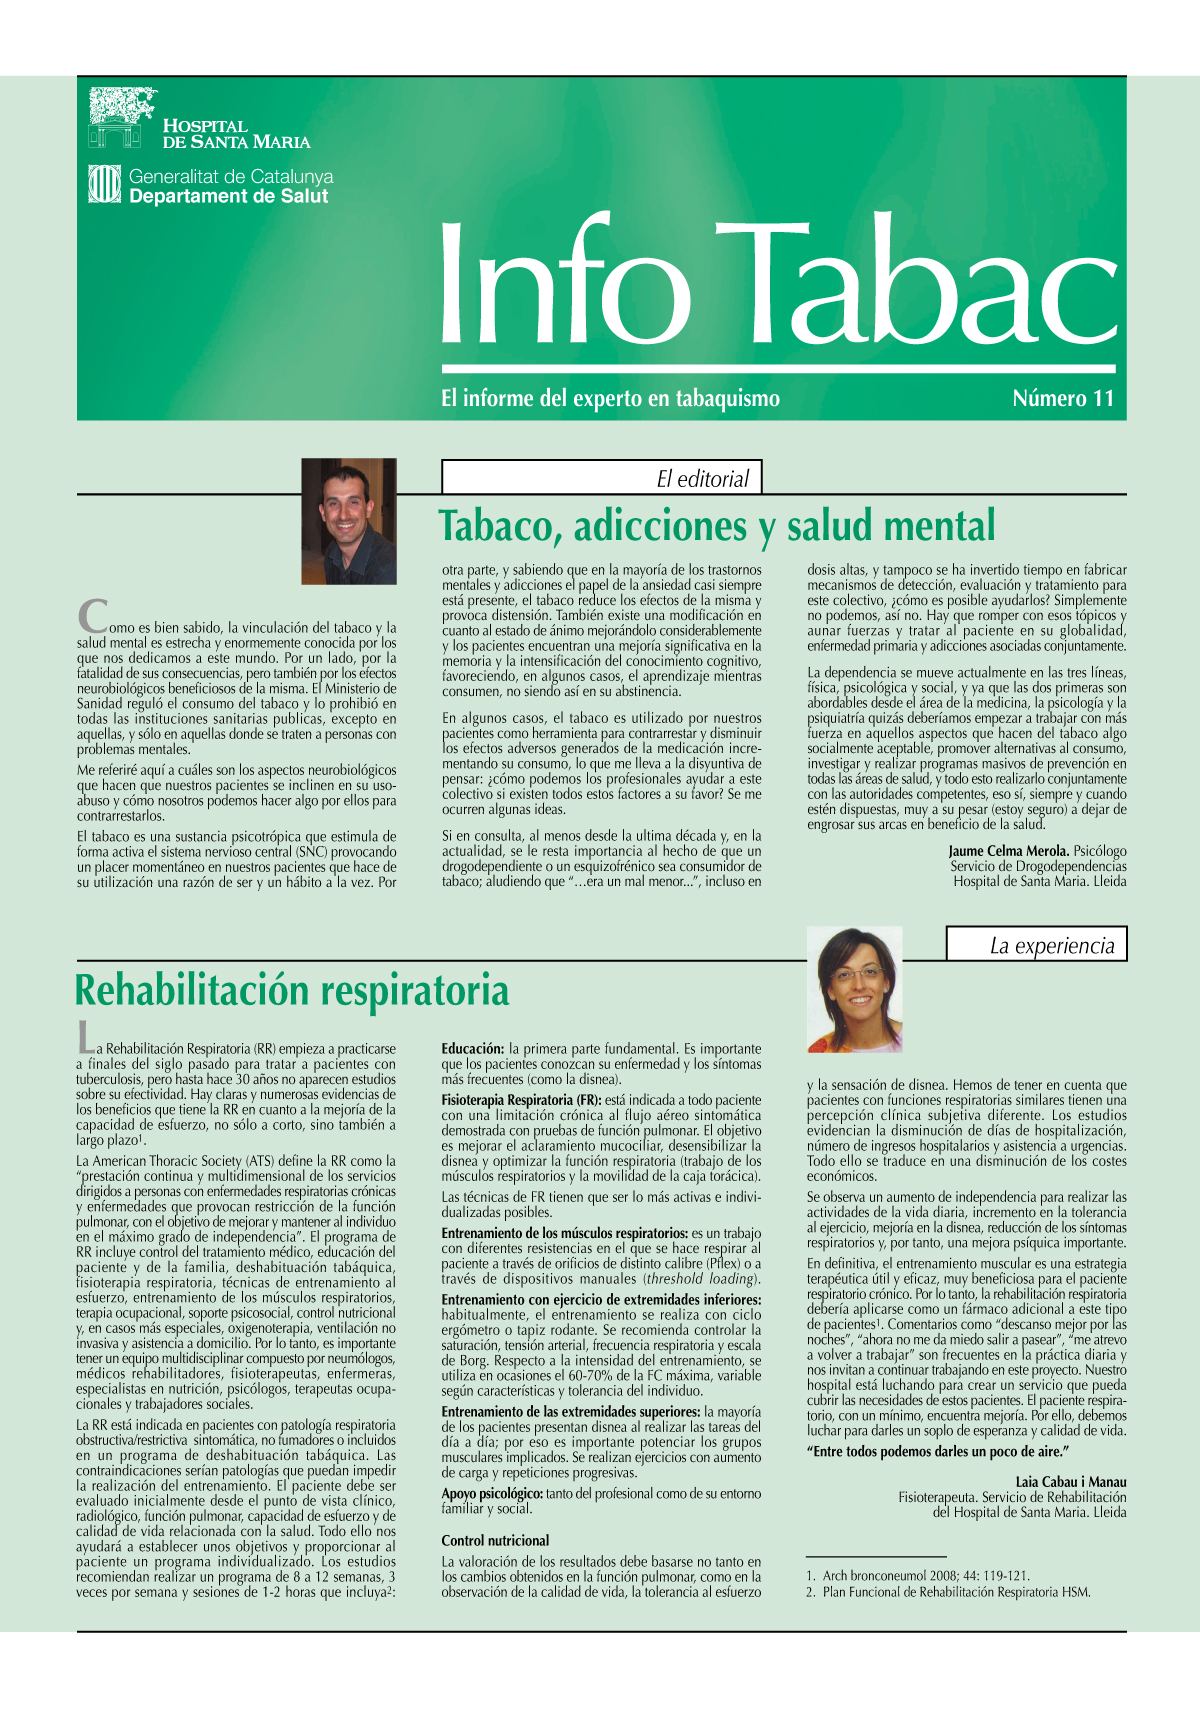 Info Tabac nº11 - Julio 2008